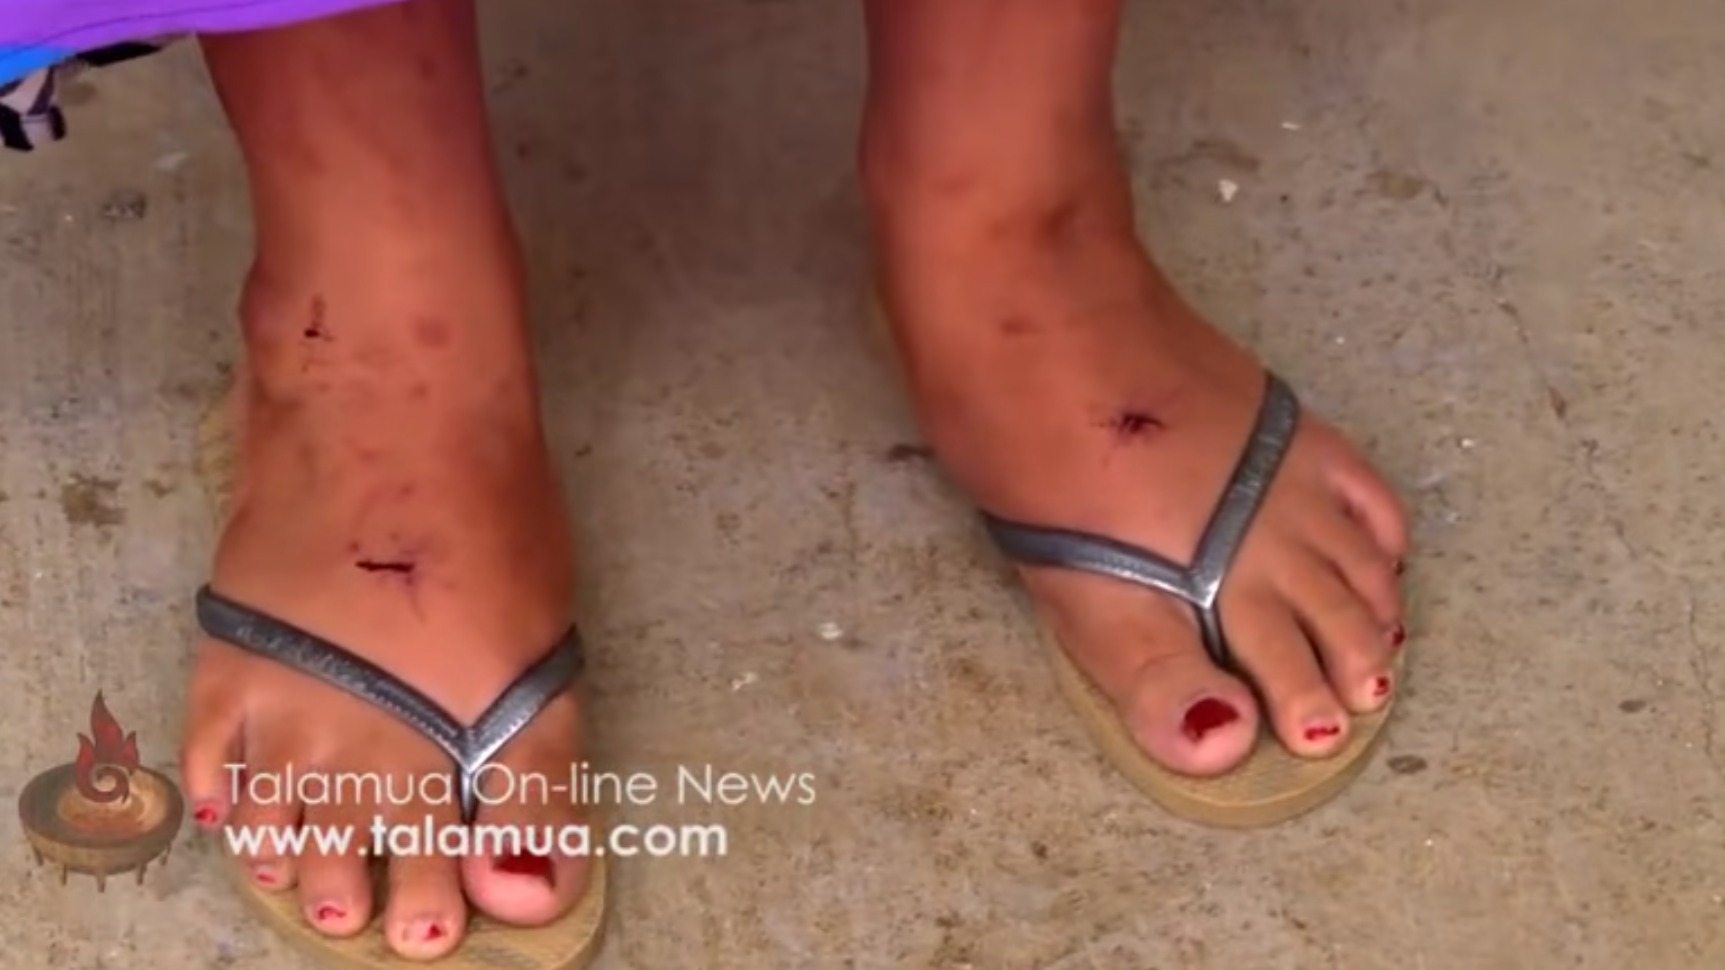 Les pieds de la Samoane Toaipuapuaga Opapo Soana’i, qui affirme avoir reçu les stigmates (capture d'écran:YouTube)